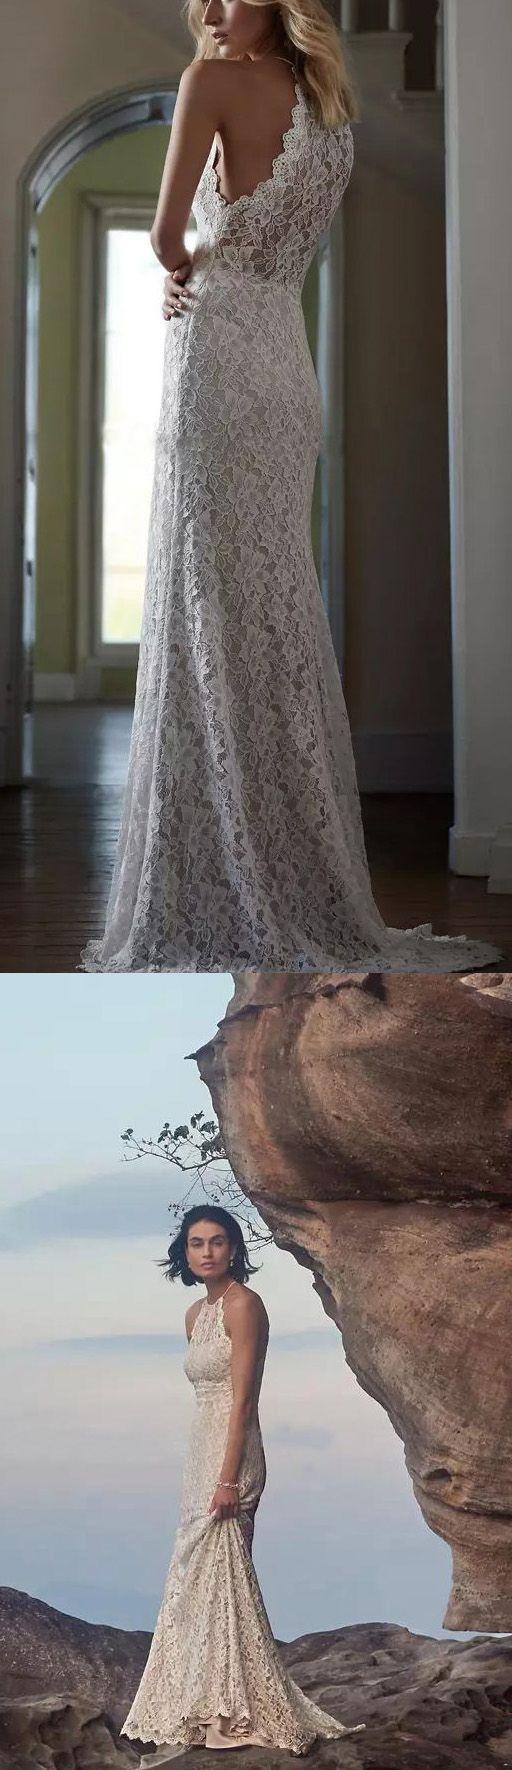 زفاف - White Wedding Dresses, Long Wedding Dresses, Long White Wedding Dresses With Lace Sweep Train Halter Sale Online WF02G48-823